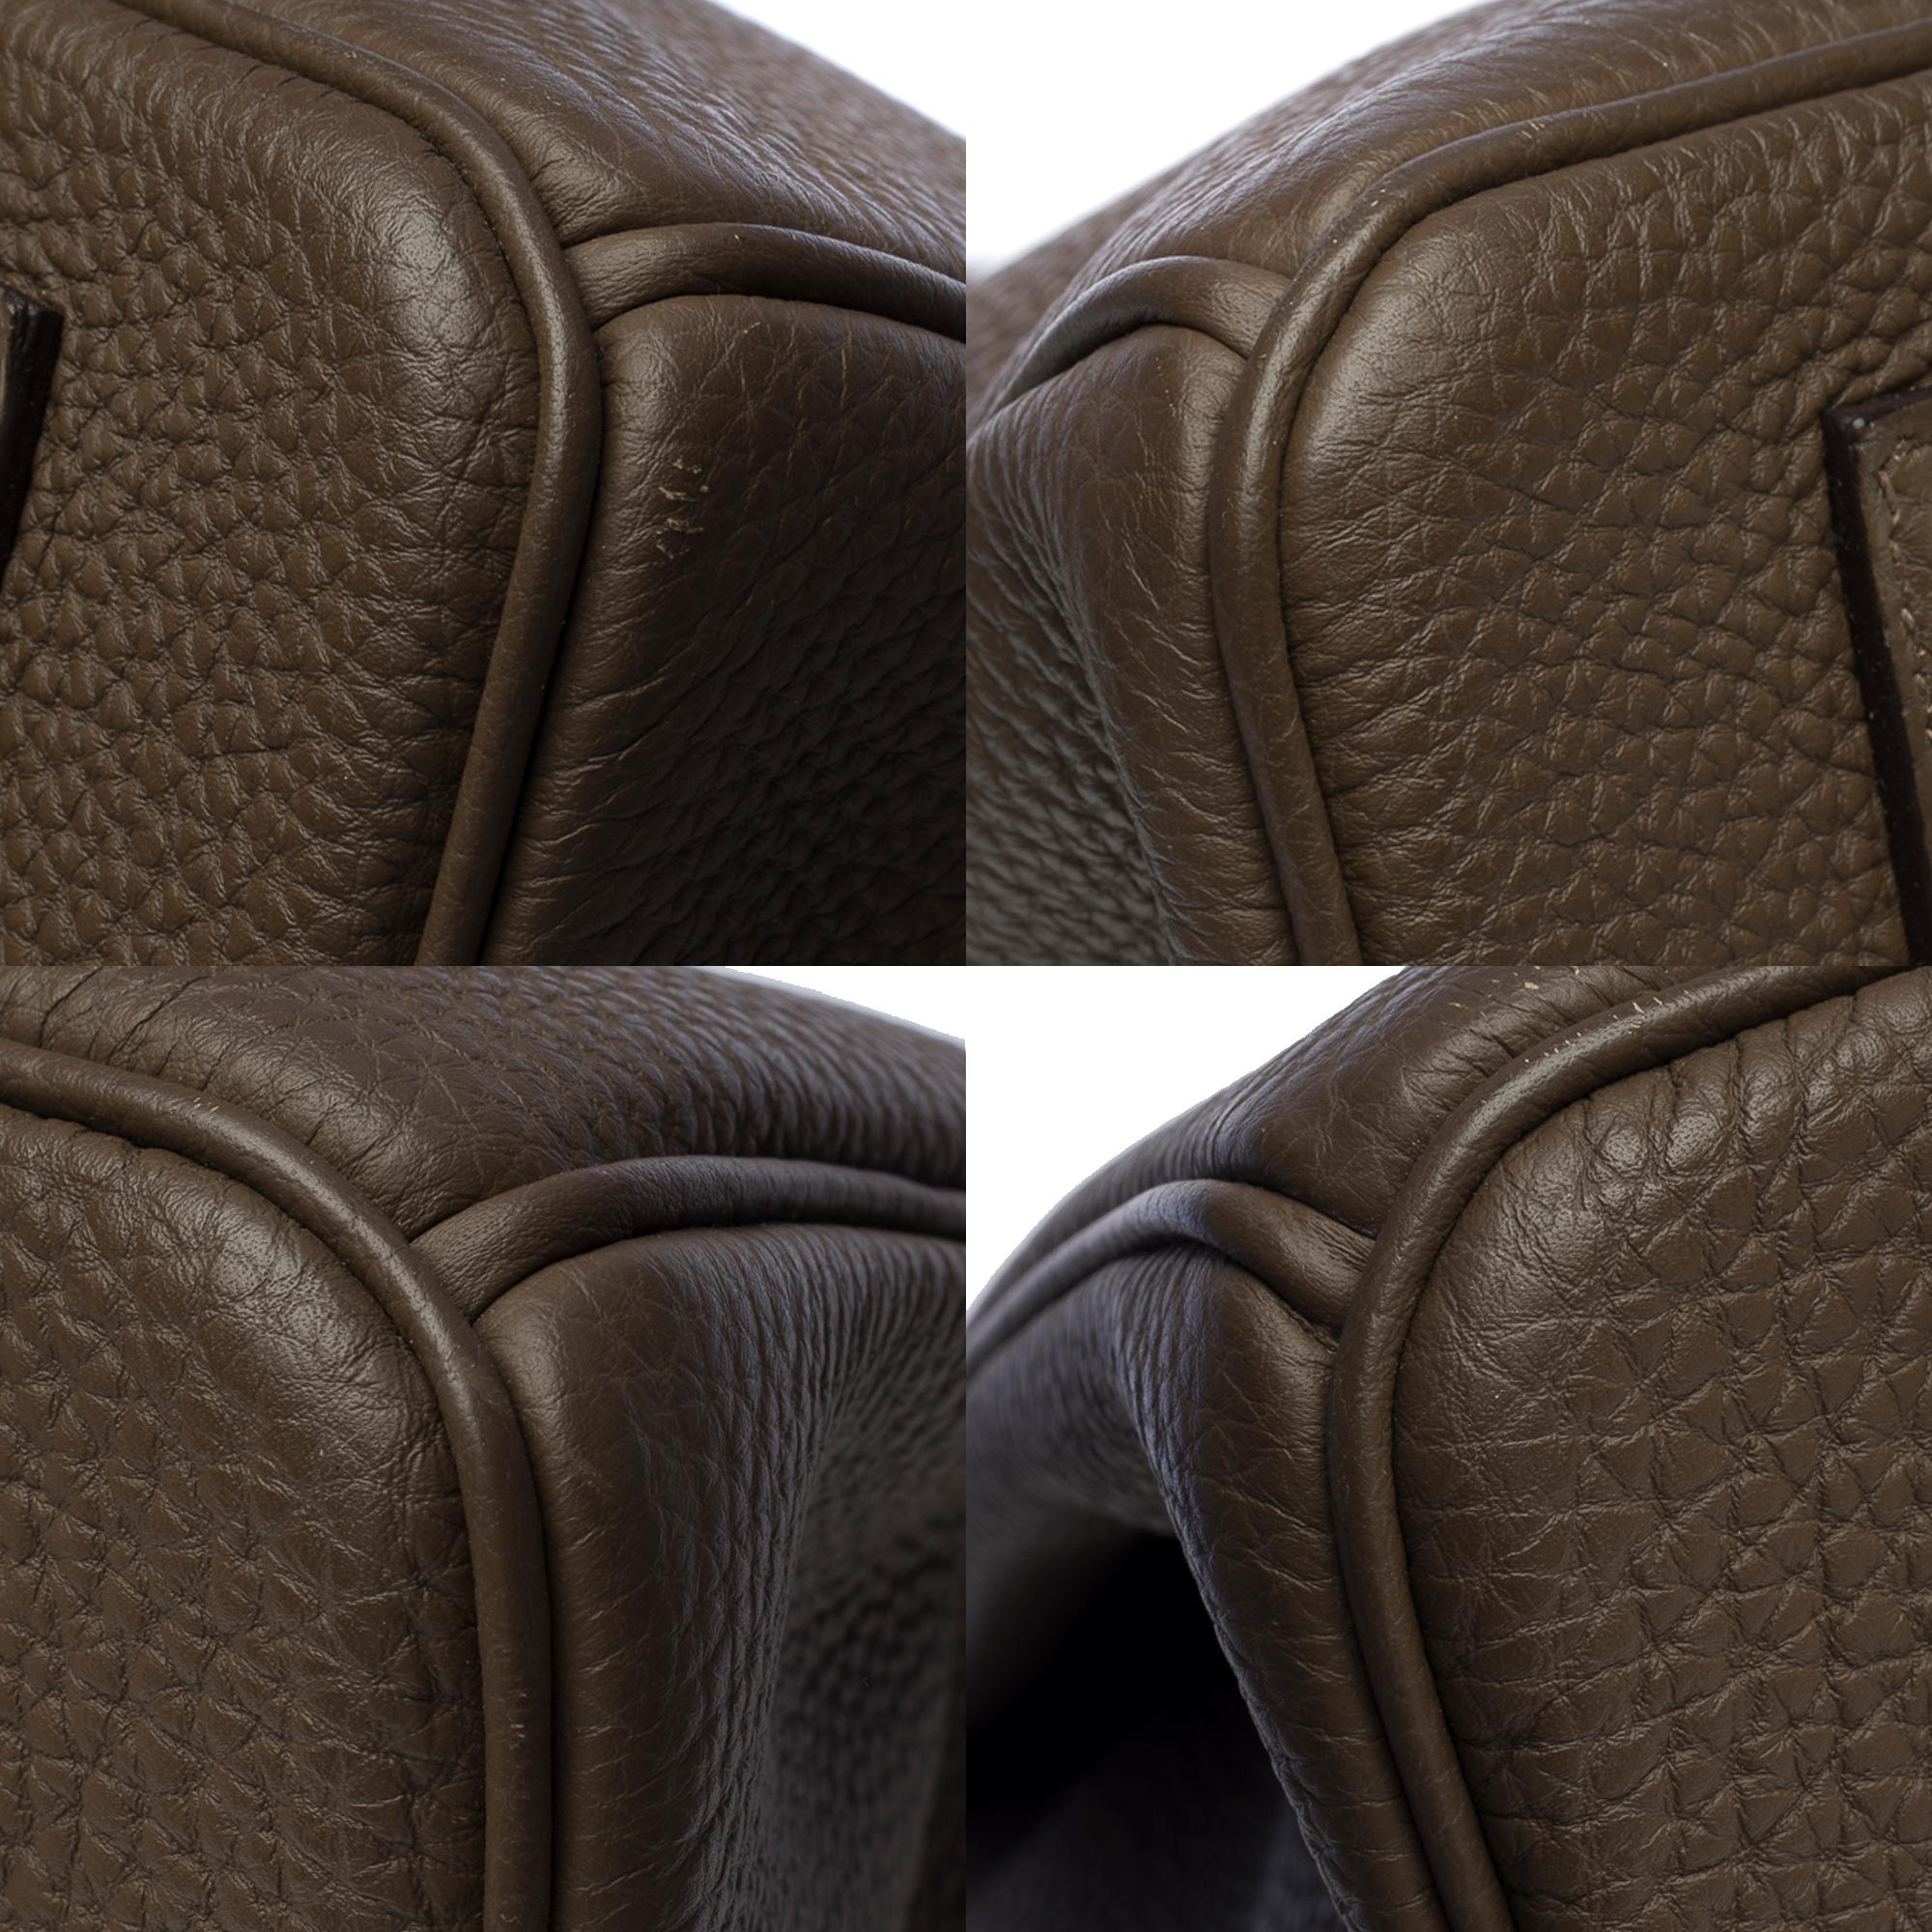 Magnificent Hermès Birkin 35 handbag in Gris Elephant Togo leather, SHW 7